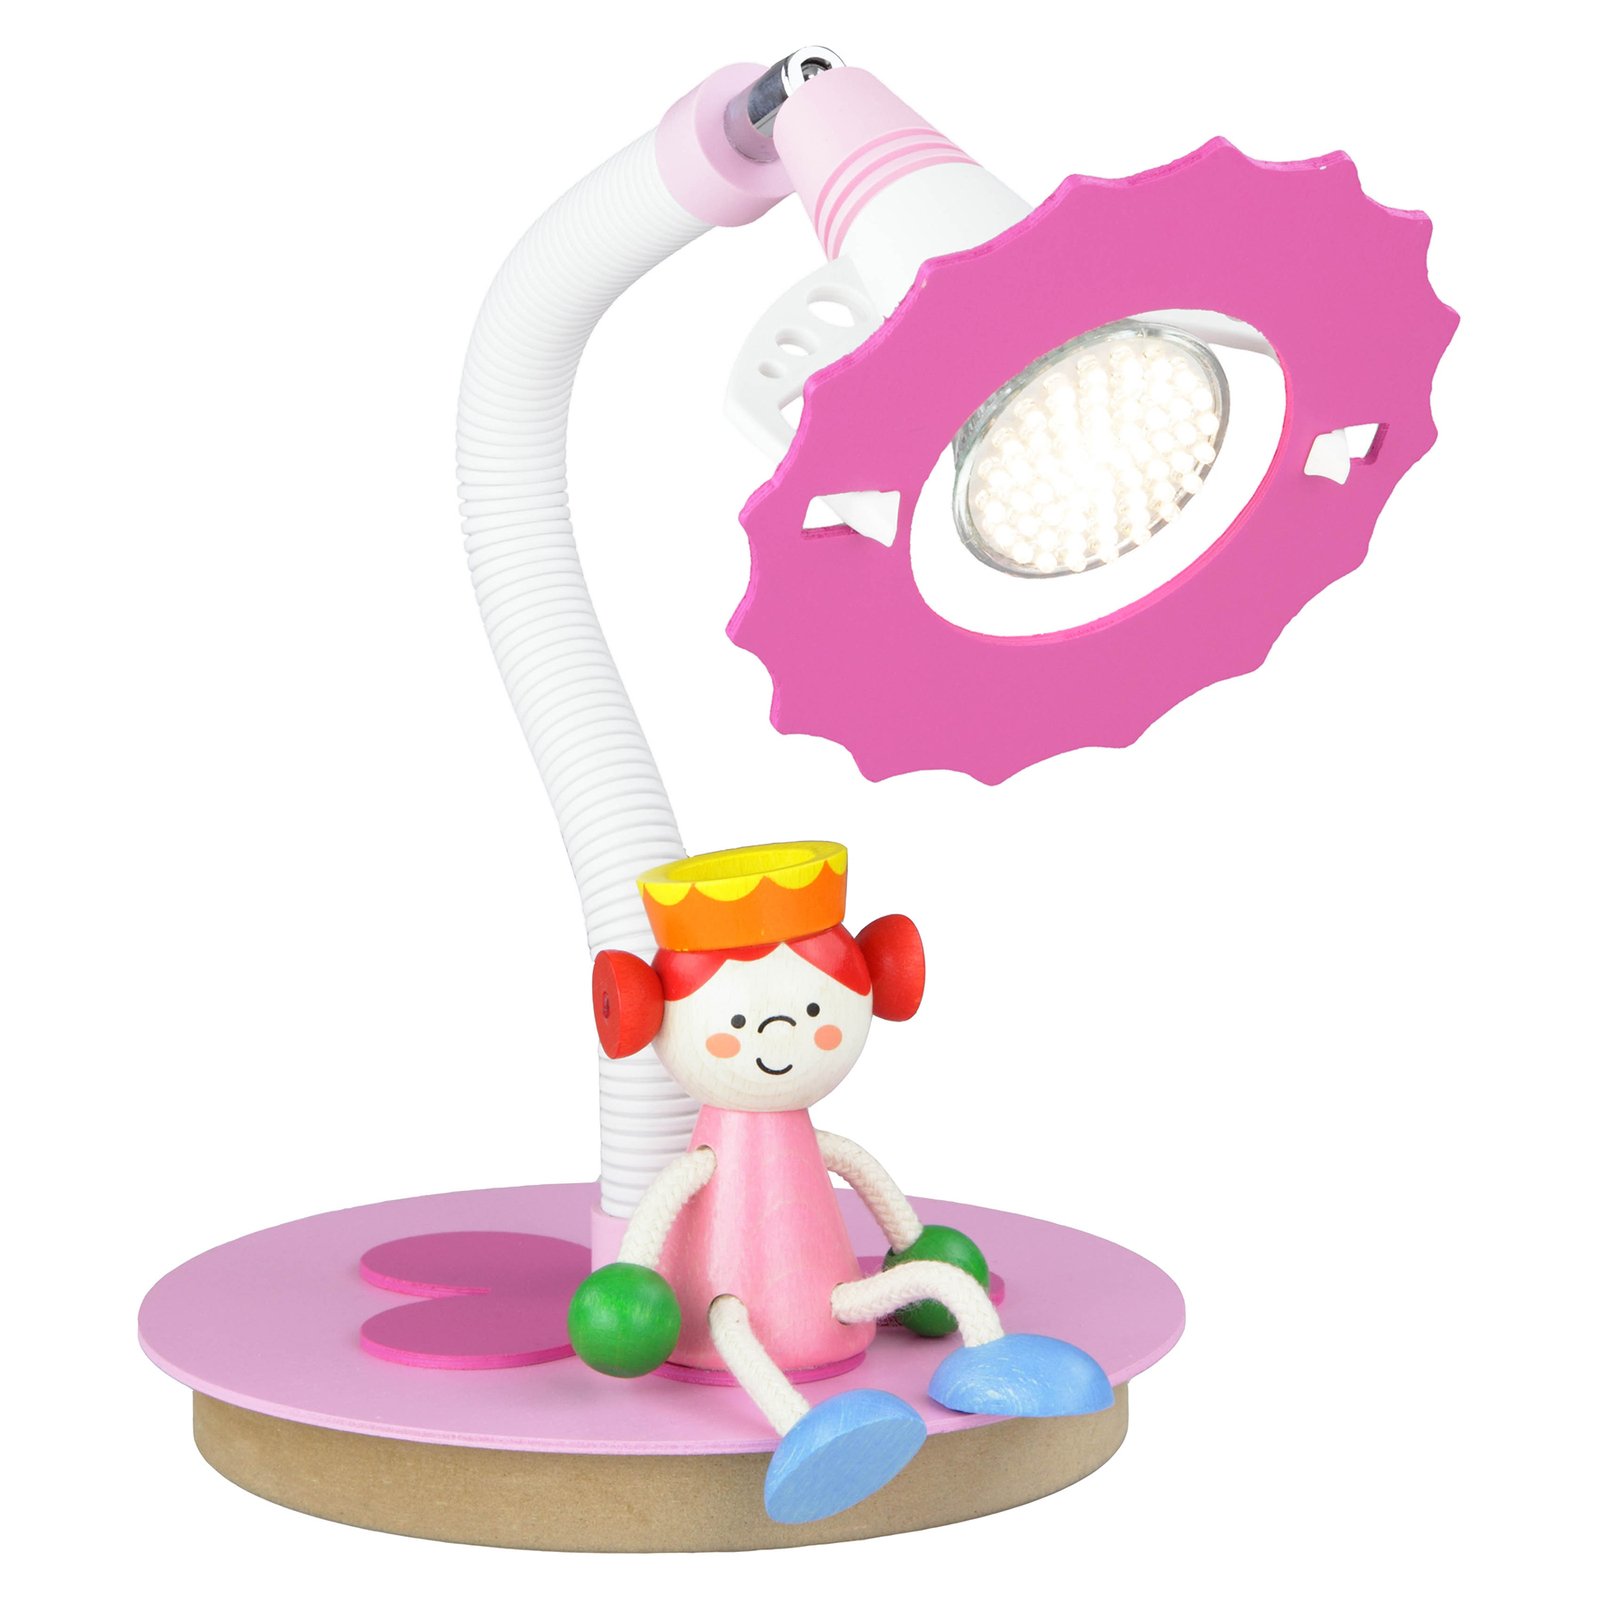 LED-bordlampe prinsesse med sittende figur